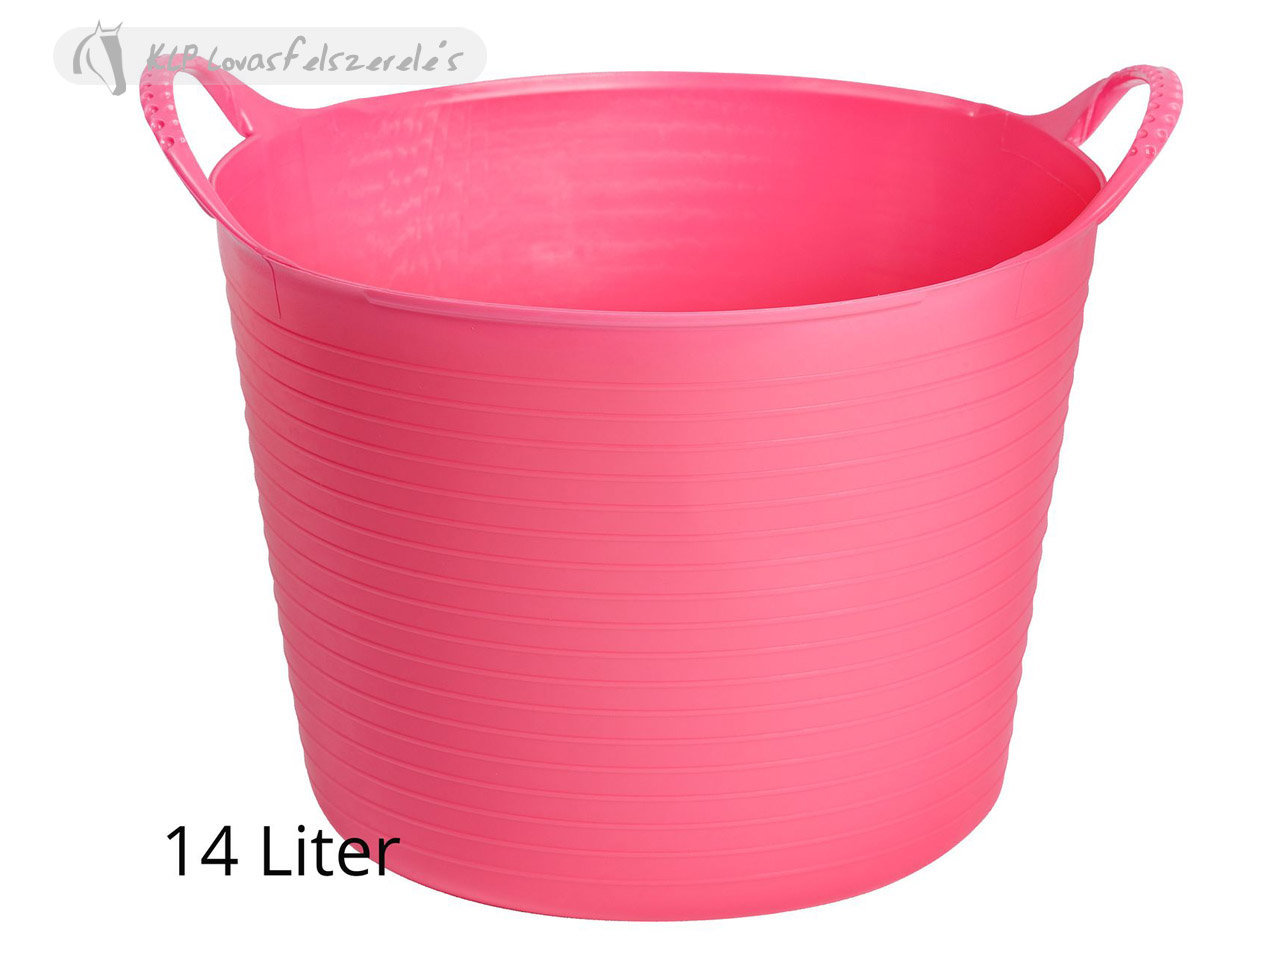 Flexible Feeding Bucket (14 Liter)